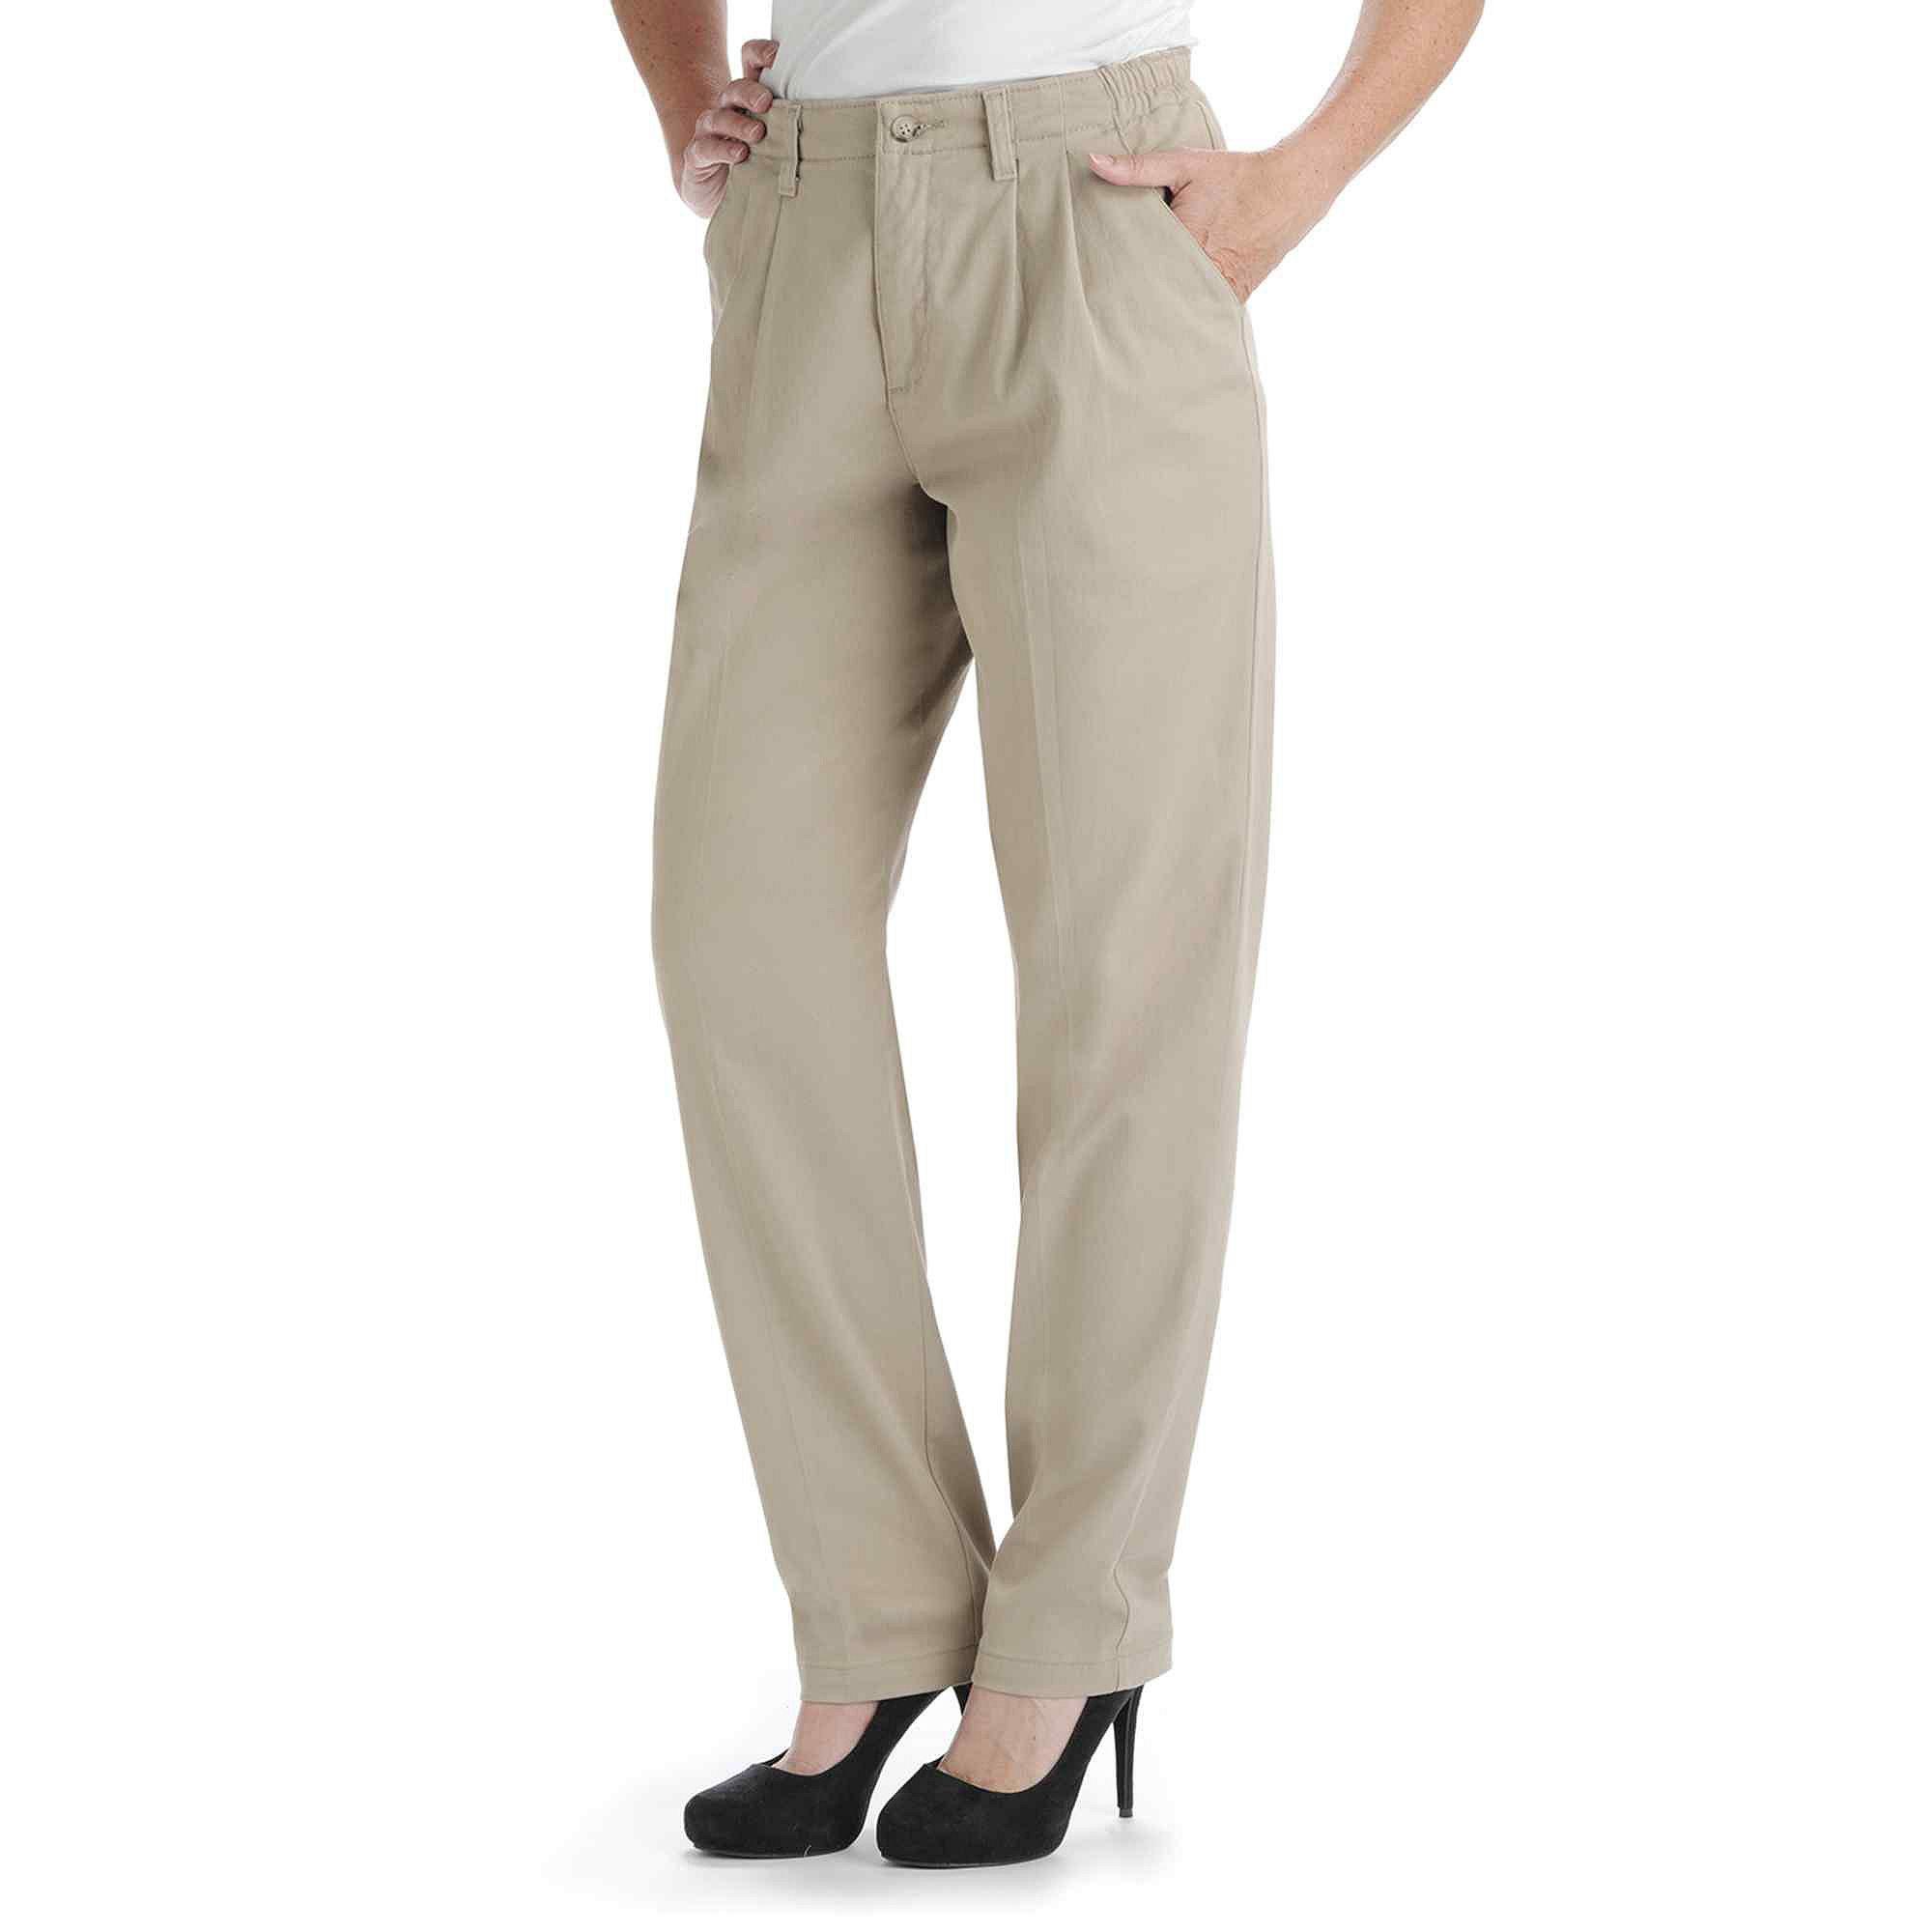 White Cross 308P Allure Womens Elastic waist Petite Pants